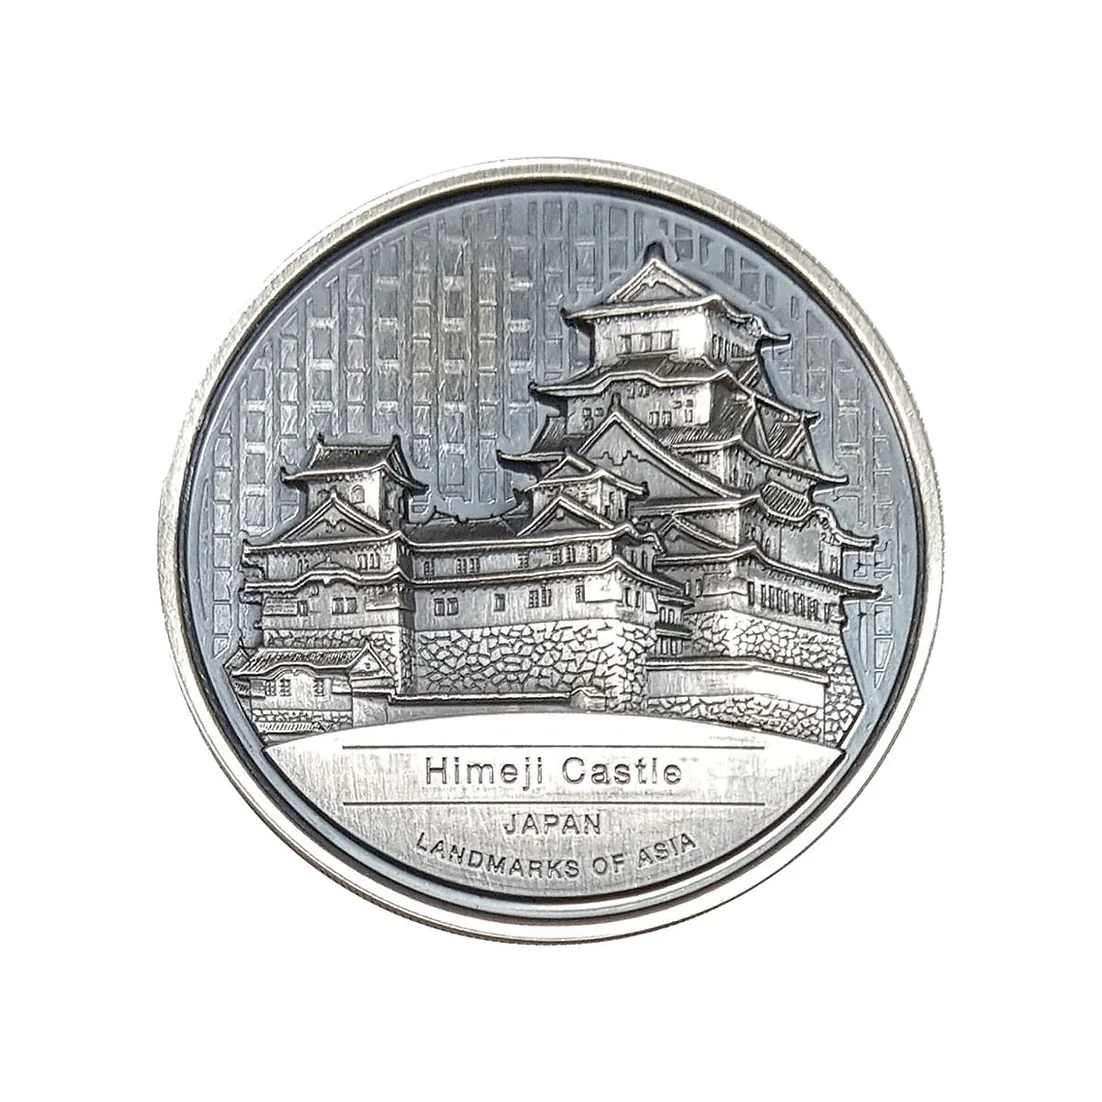 2020 Himeji Castle - Landmarks Of Asia - Japan 2oz Silver Coin Reverse View